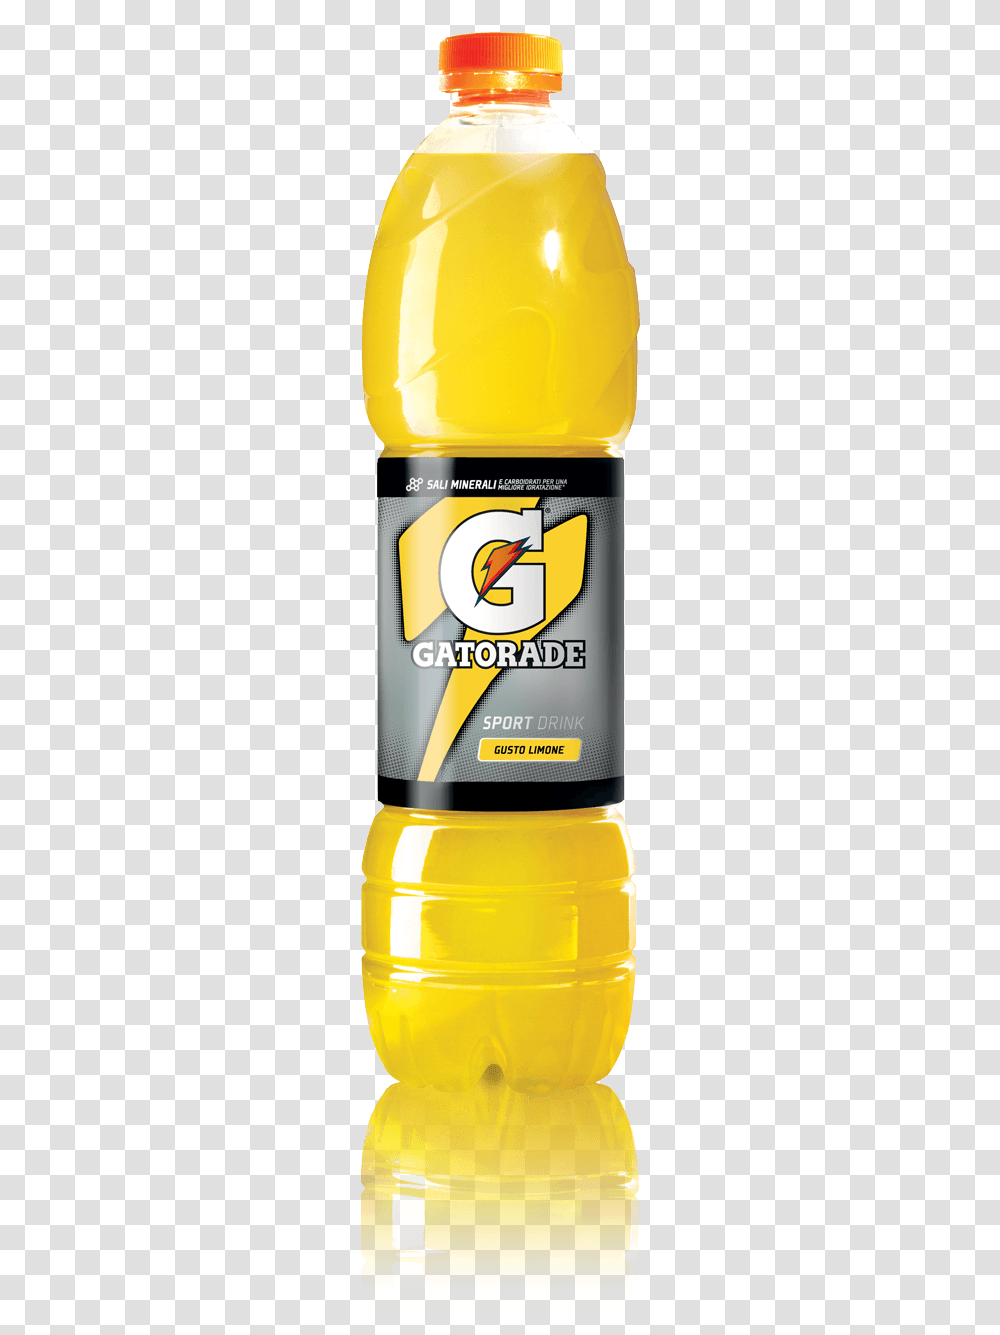 Gatorade Sport Drink Gusto Limone Bottiglia Gatorade, Helmet, Bottle, Cosmetics Transparent Png